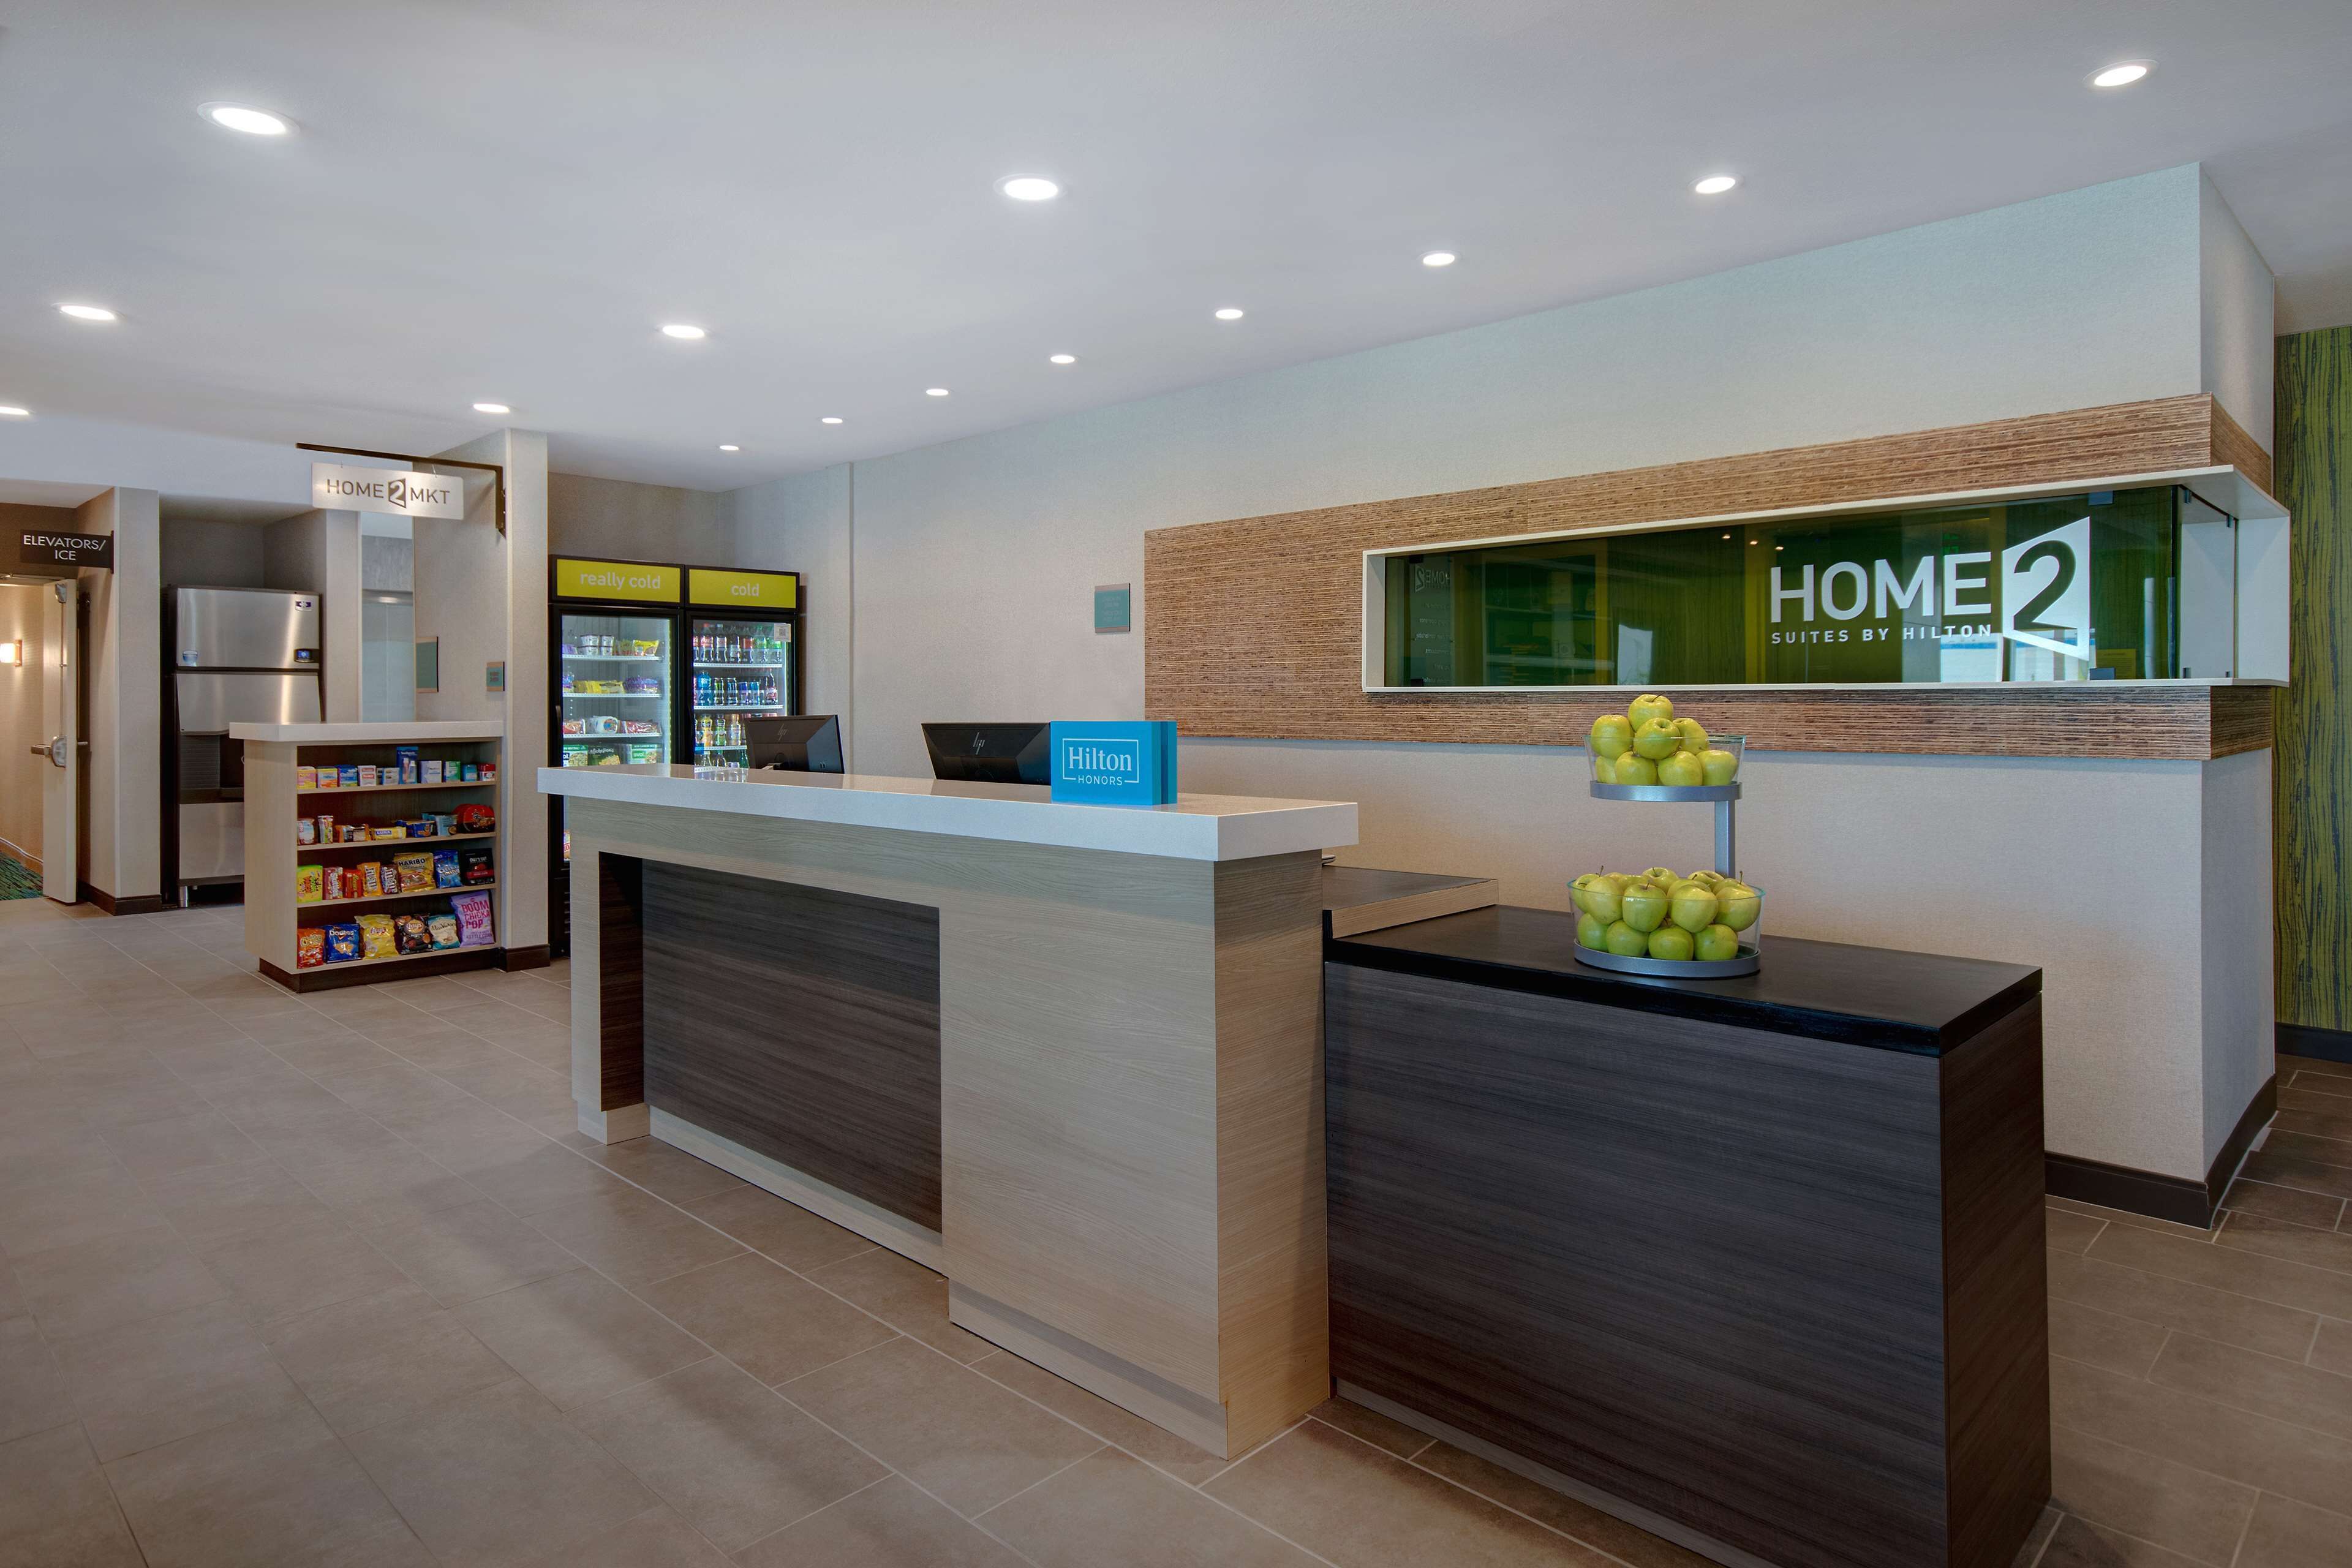 Home2 Suites by Hilton Garden Grove